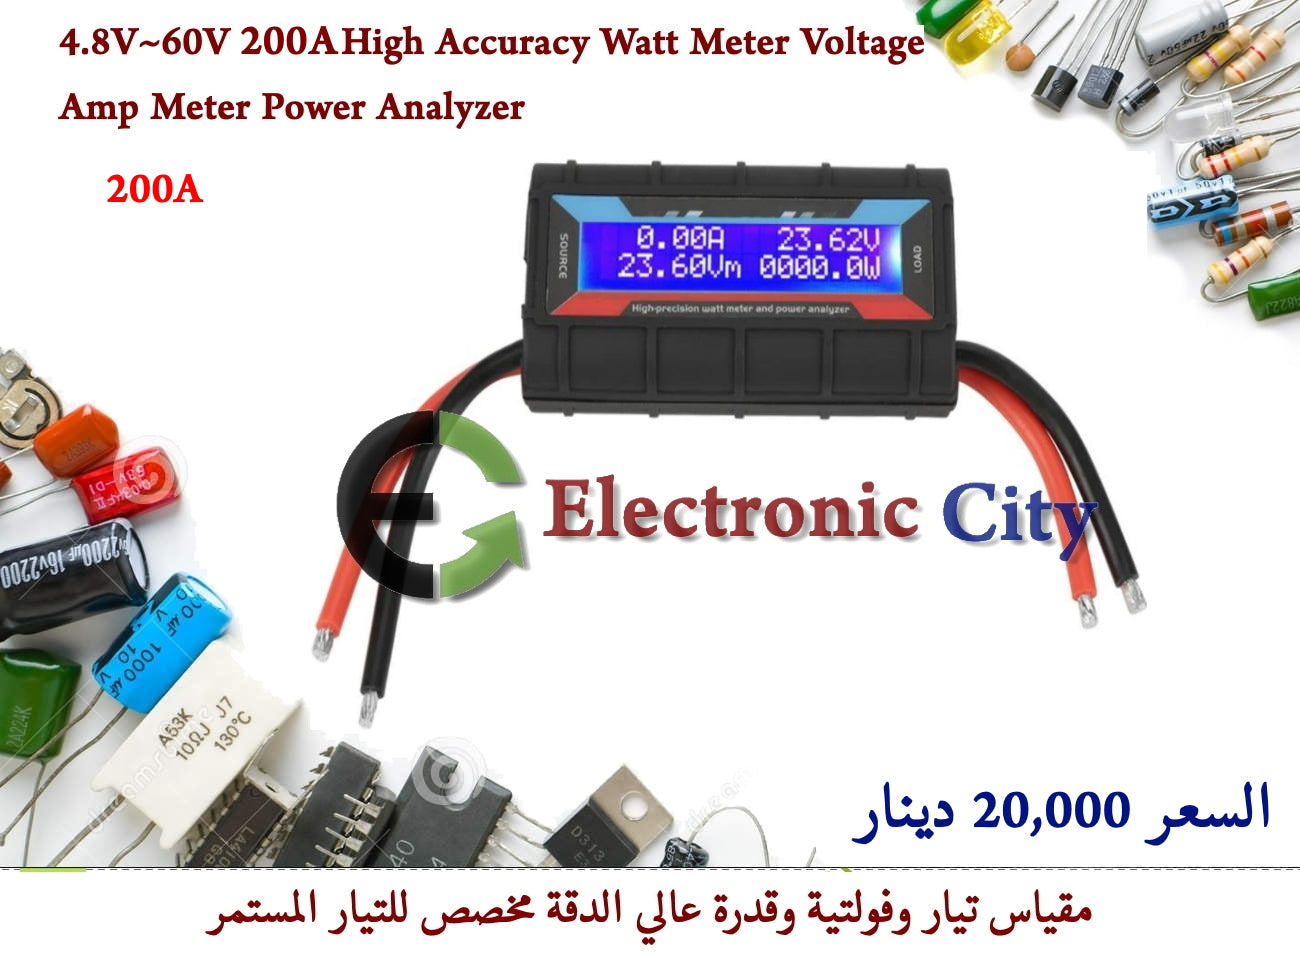 4.8V~60V 200A High Accuracy Watt Meter Voltage Amp Meter Power Analyzer